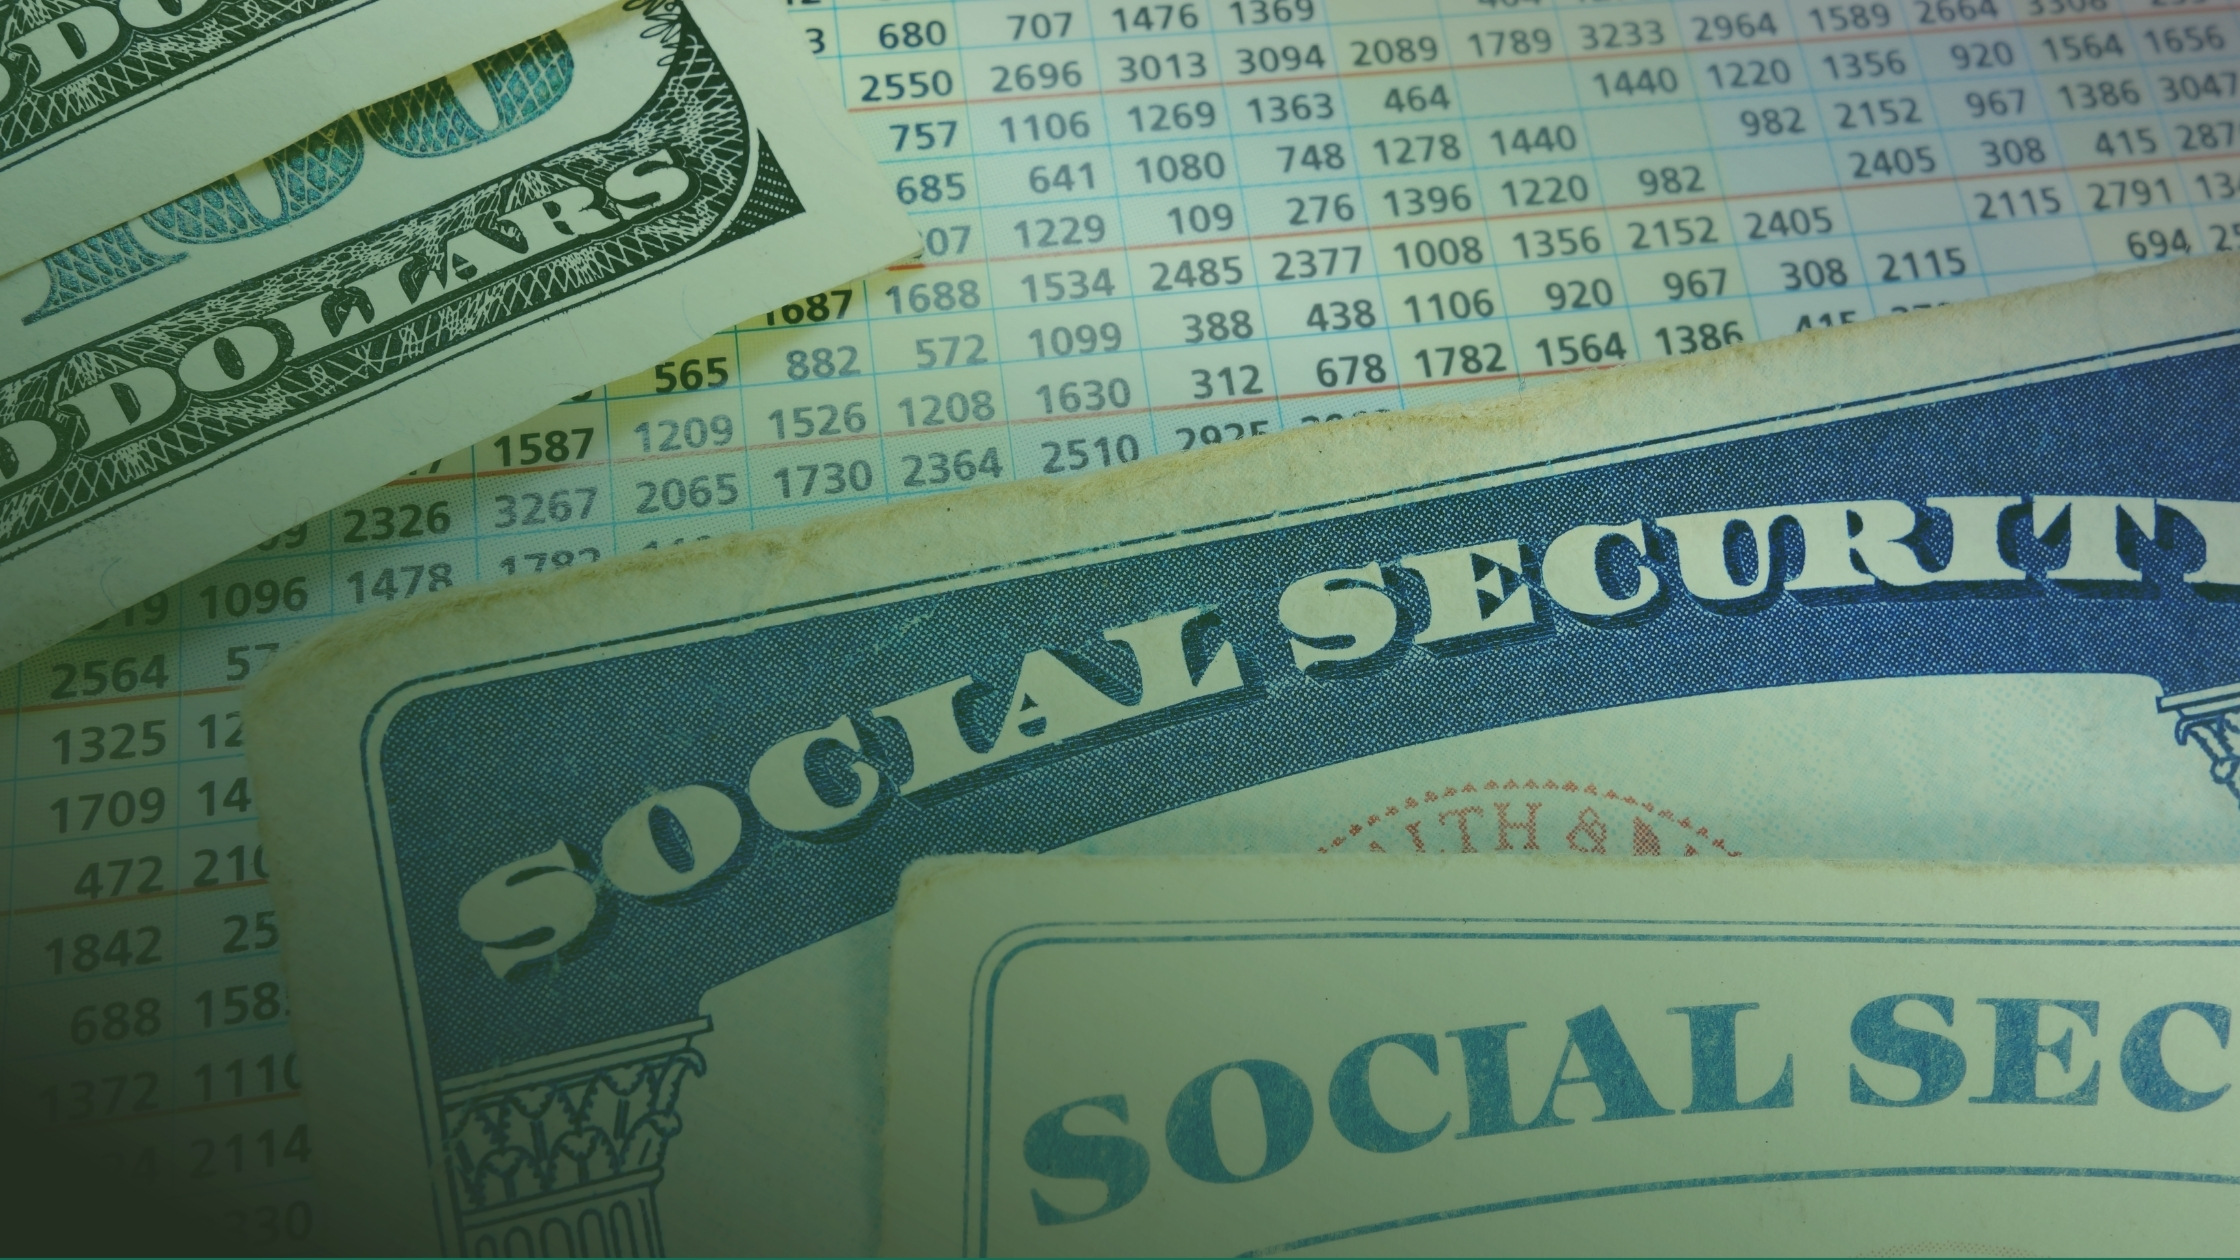 Social Security and savings